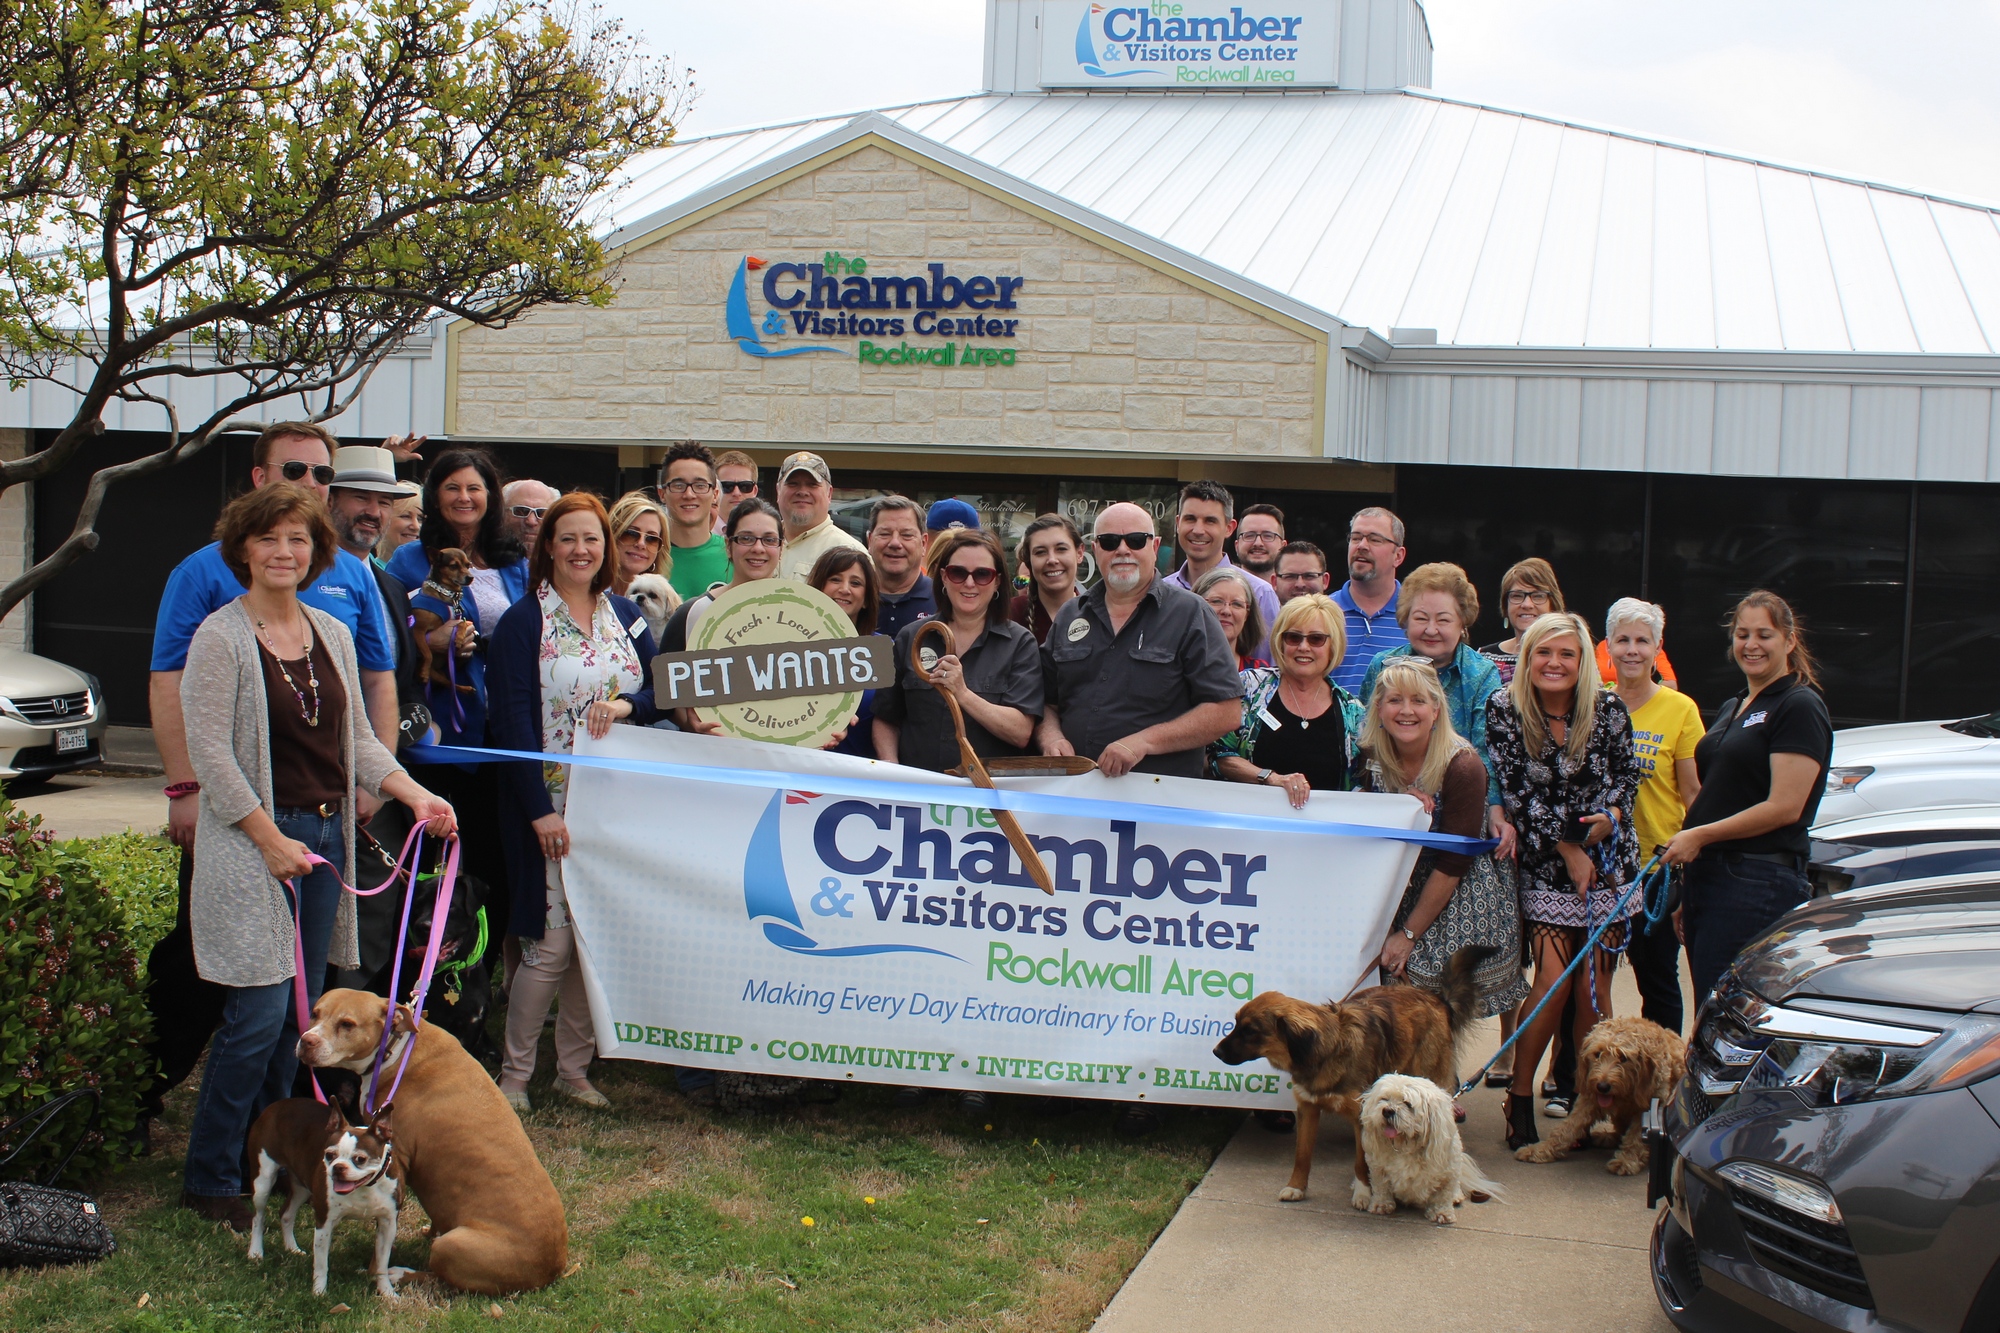 Rockwall Chamber celebrates Pet Wants with ribbon cutting